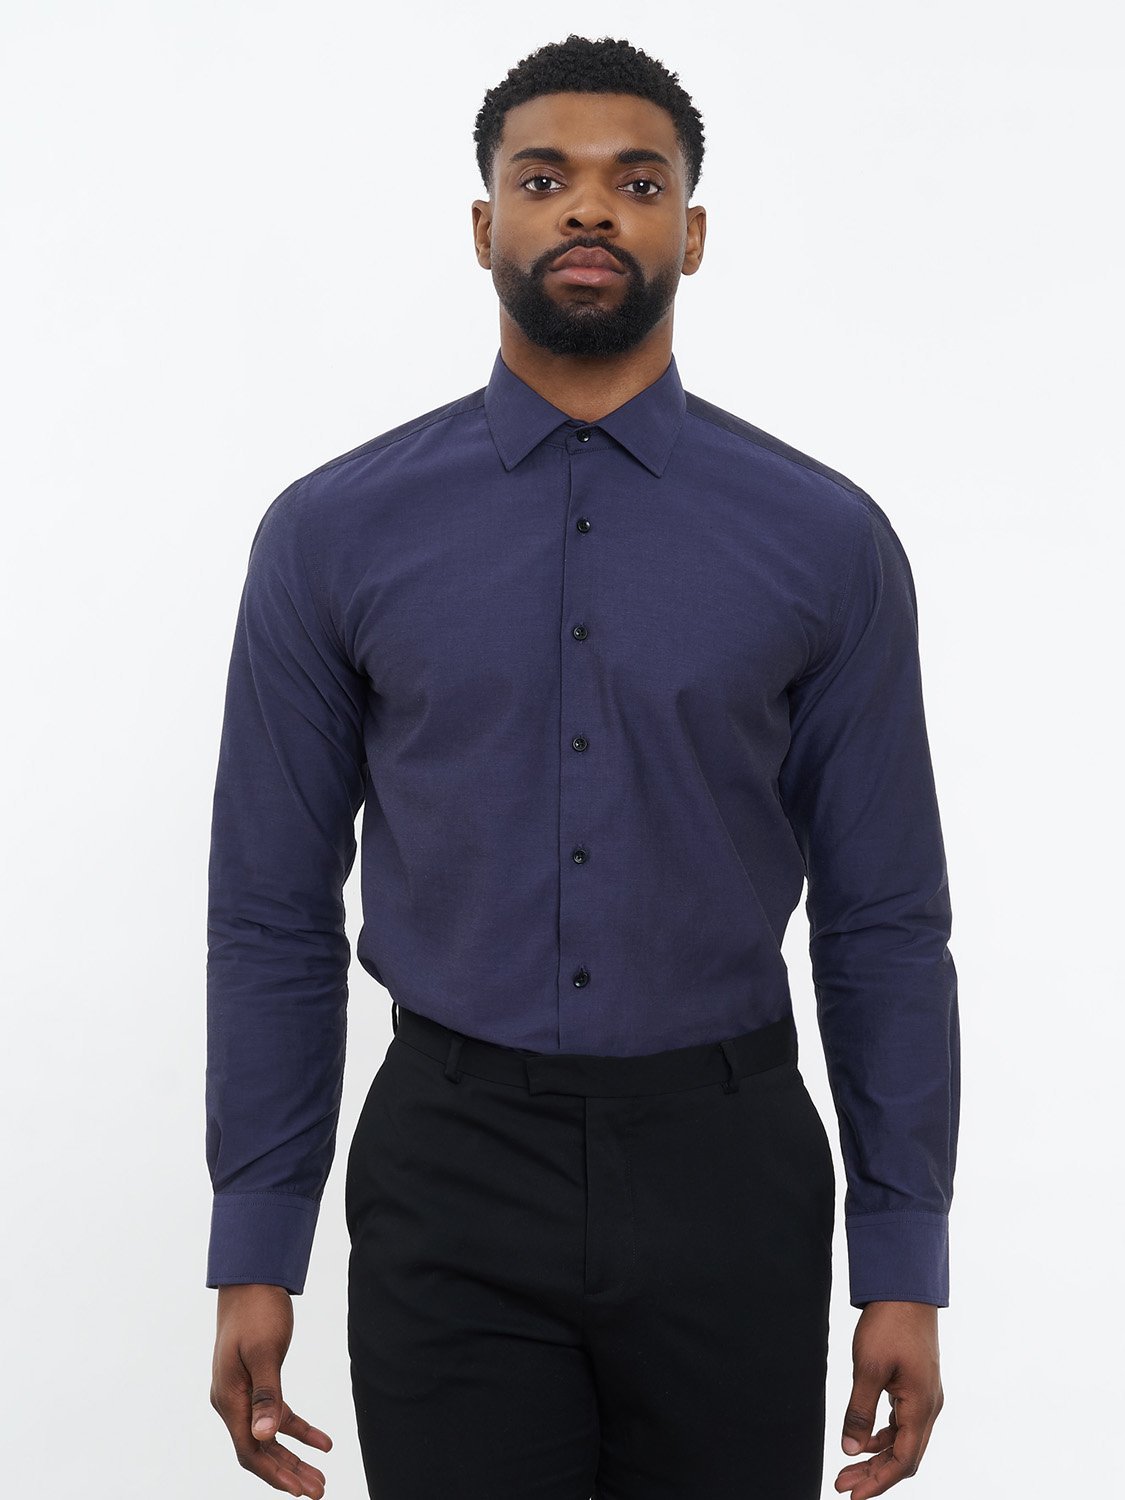 carpasus sustainable organic cotton tailor-made shirt darkblue. Nachhaltiges Carpasus Masshemd aus Bio Baumwolle in Dunkelblau